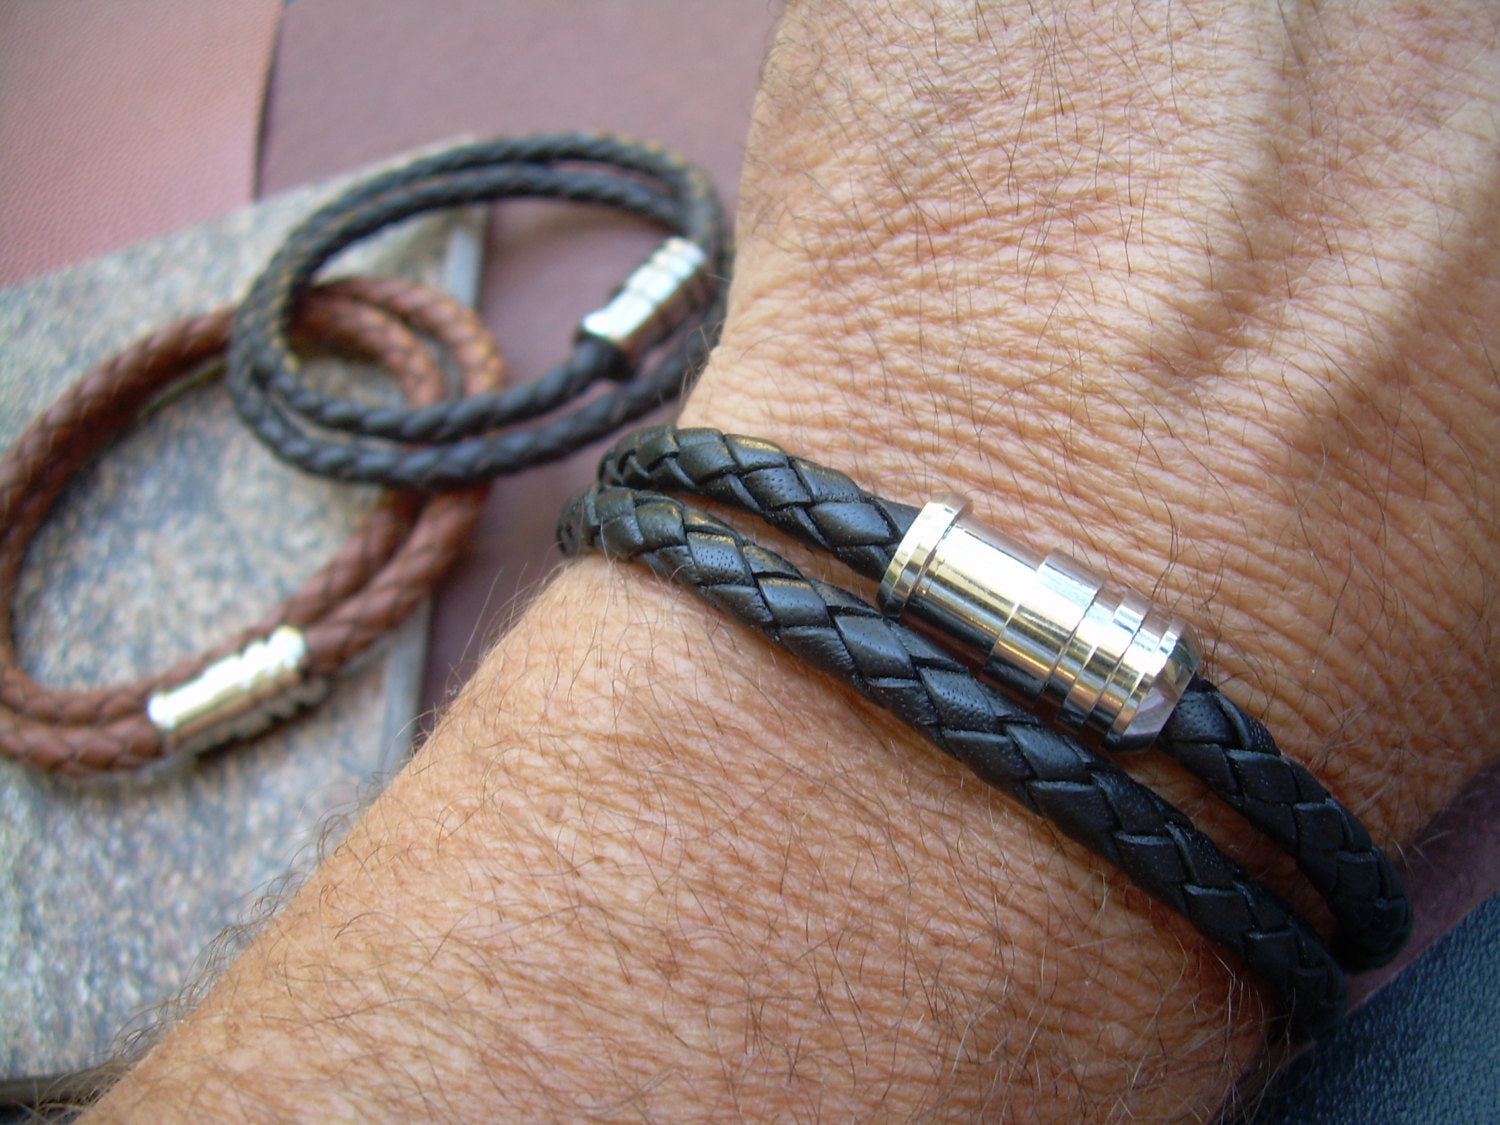 Men's Stainless Steel Clasp Double Black Braid Leather Bracelet